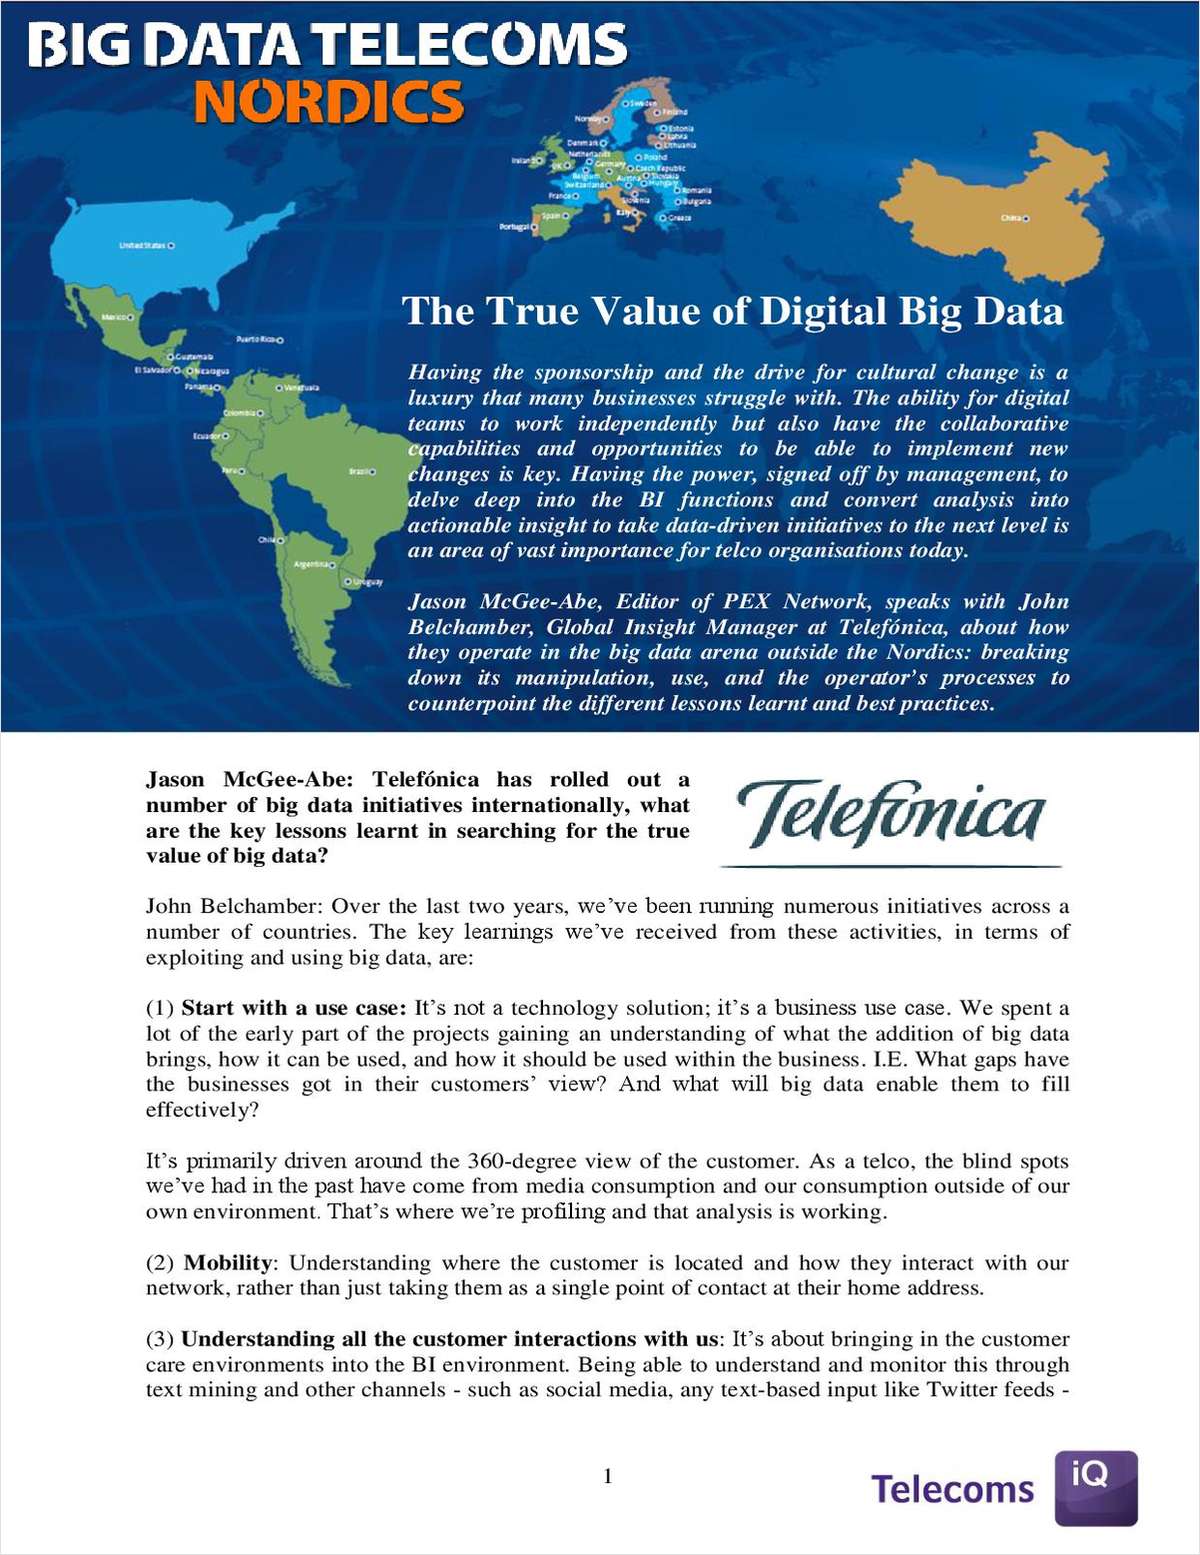 The True Value of Digital Big Data